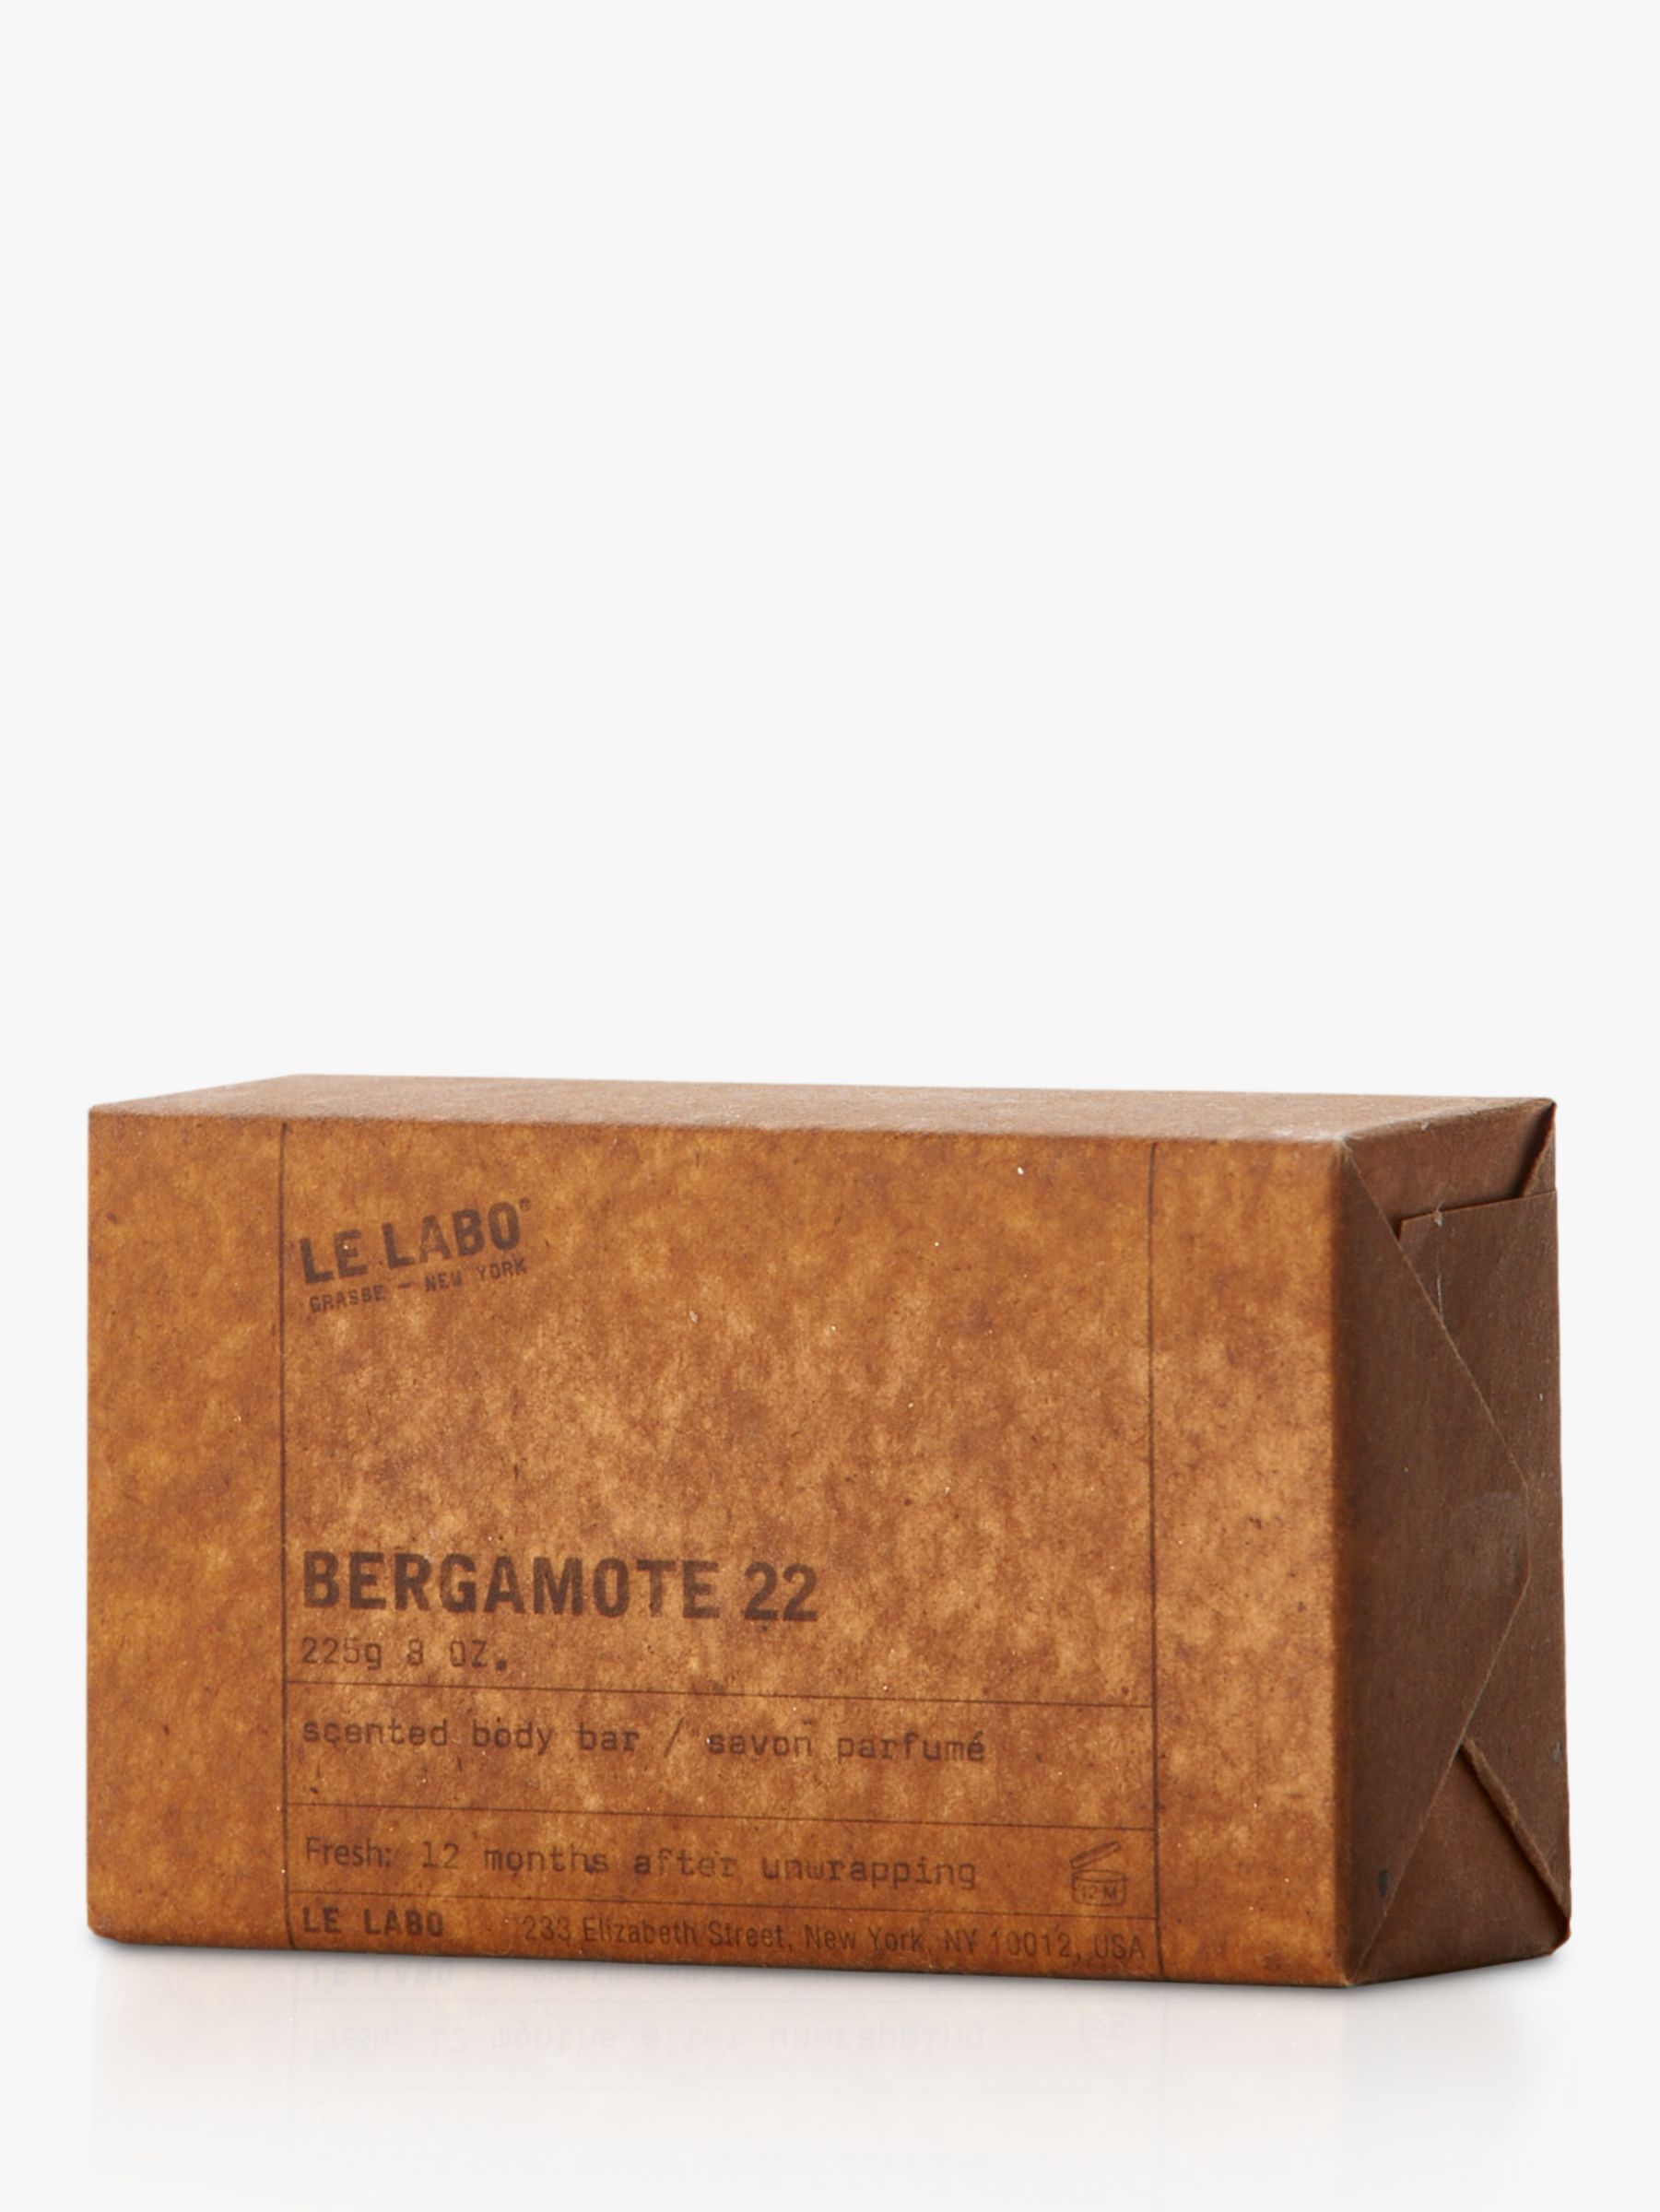 Le Labo Bergamote 22 Scented Body Bar, 225g 1